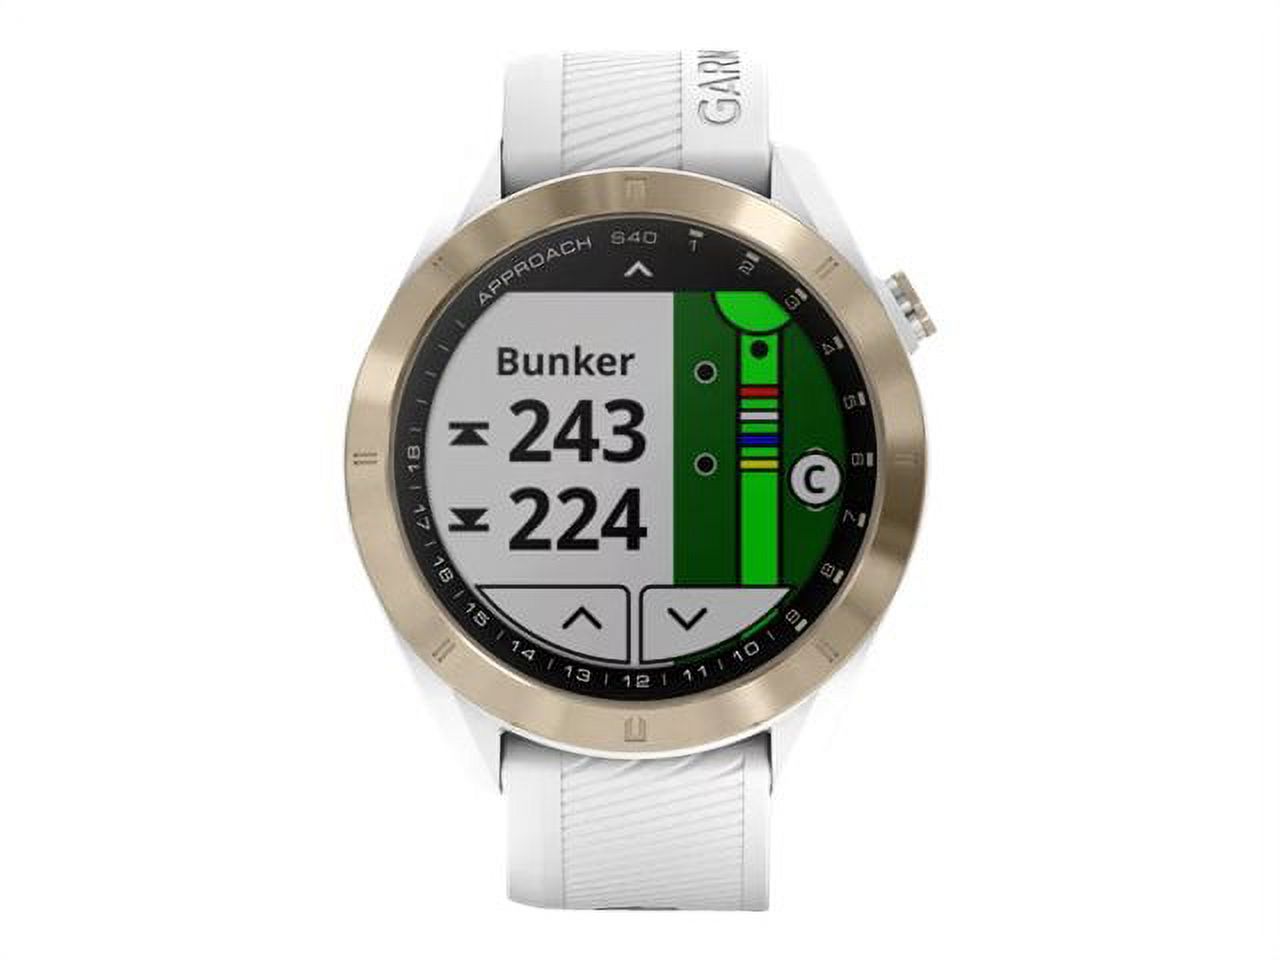 Garmin Approach S40 GPS Golf Smartwatch in White - image 2 of 7